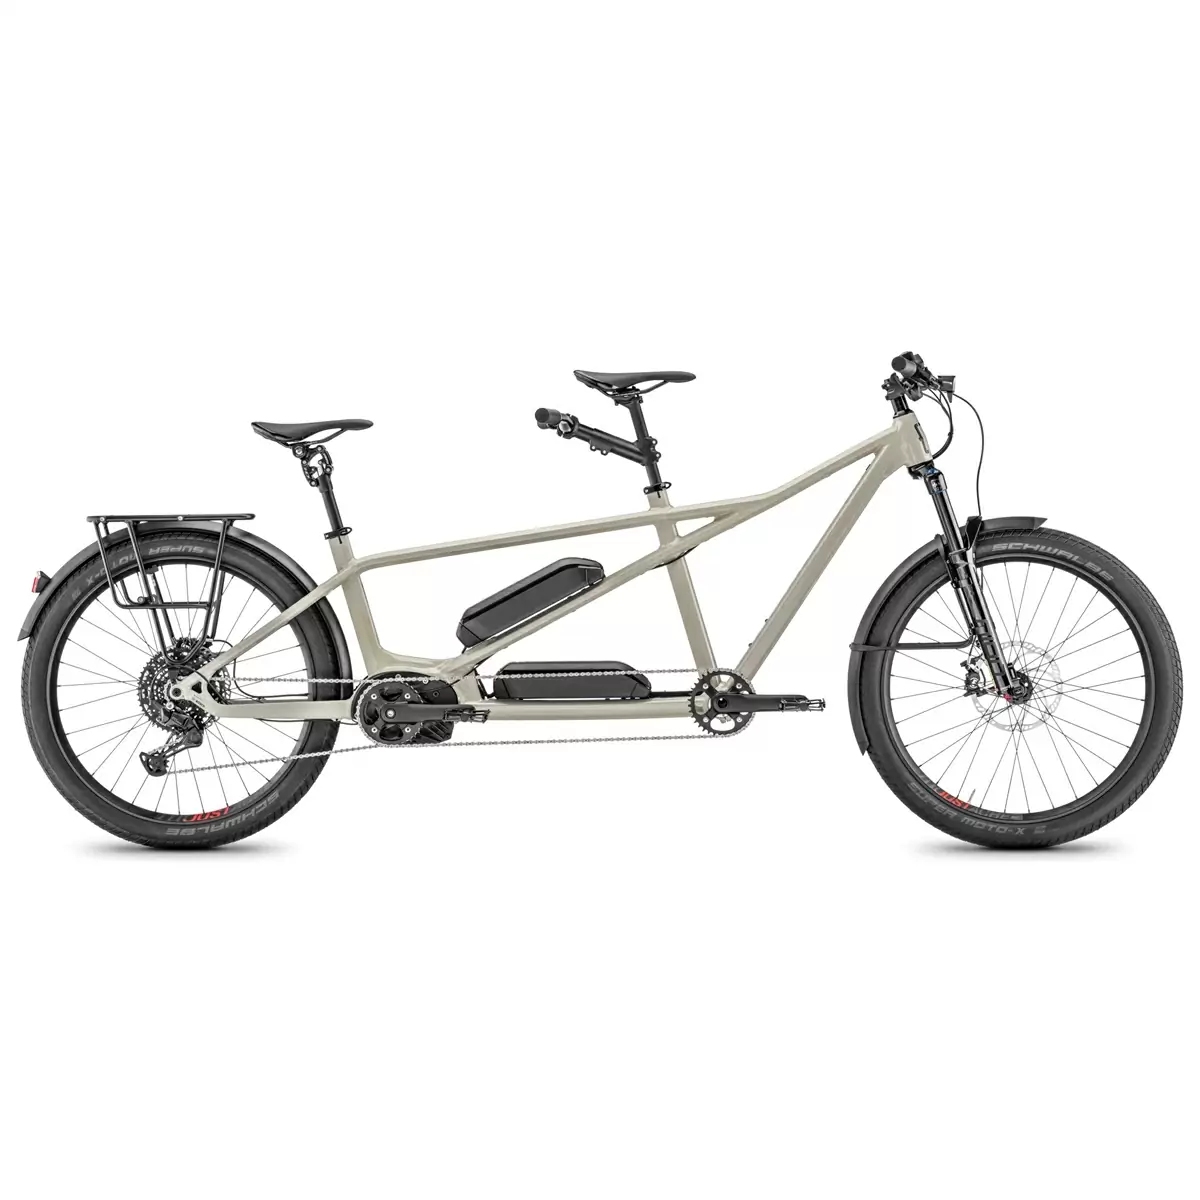 Tandem E-bike Samedi 27 X2 TRK 27.5 140mm 11v 545+545Wh Bosch Performance Line CX Smart Taglia M/L - image